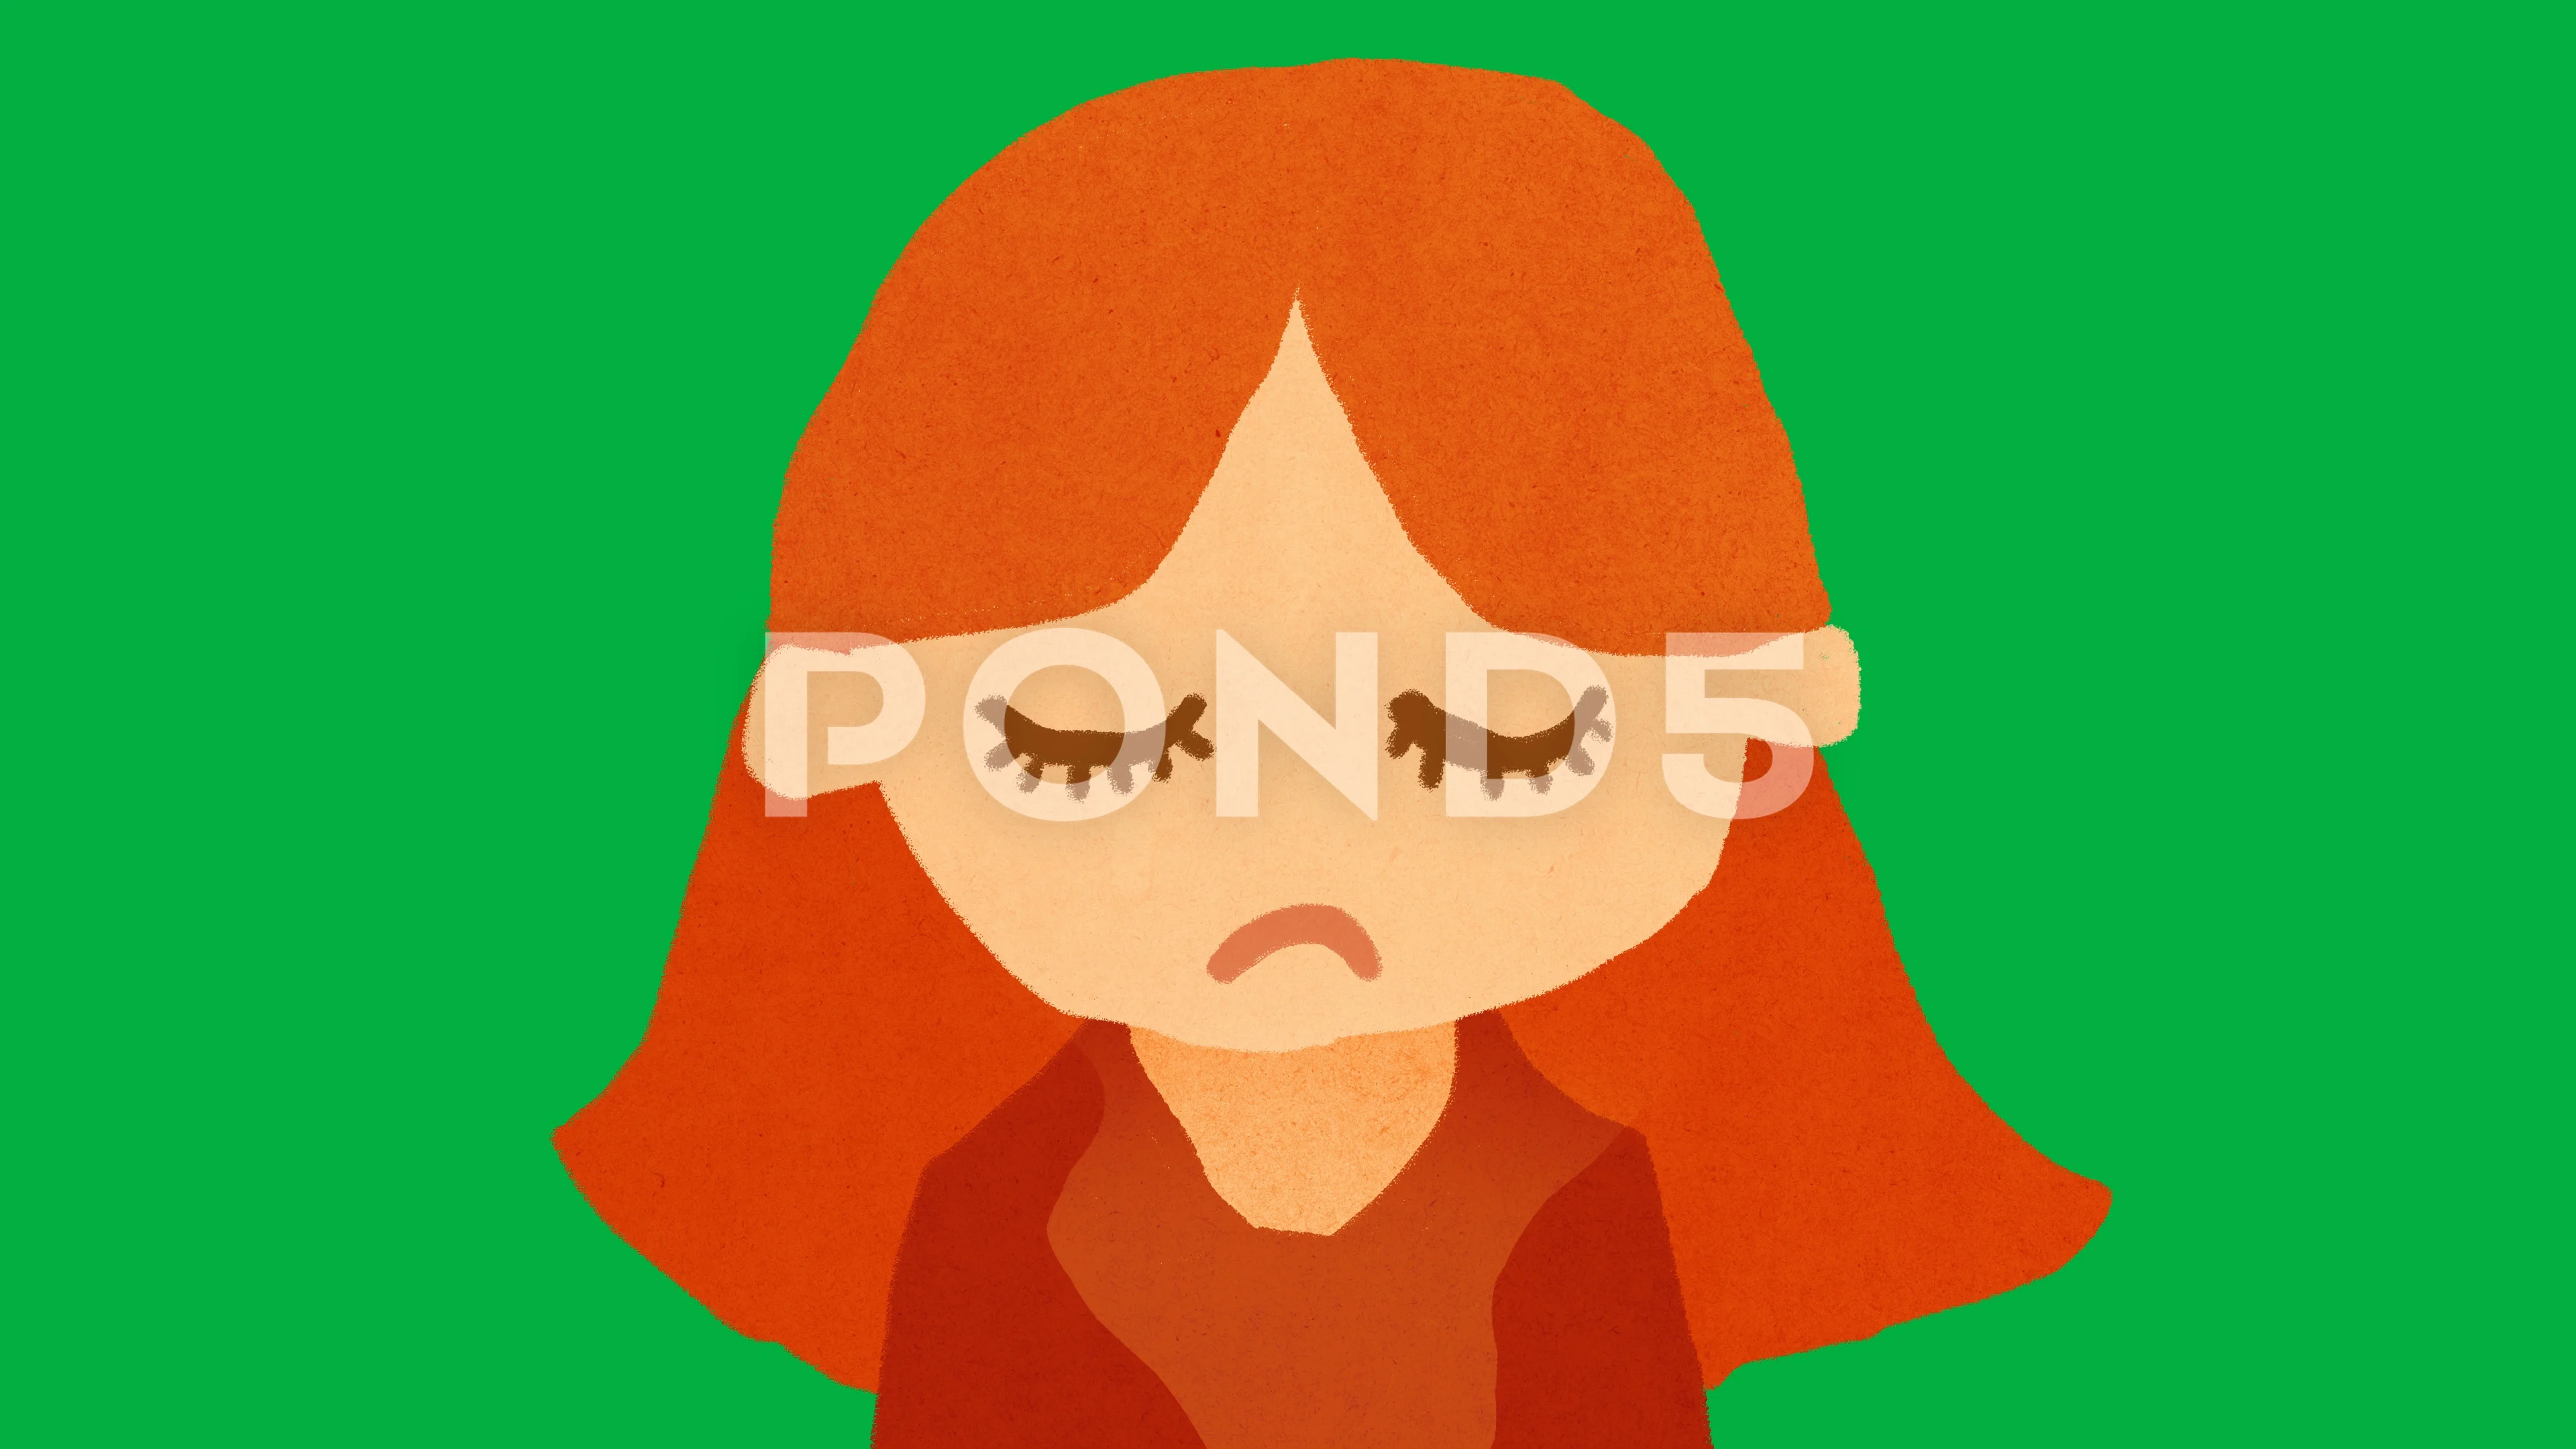 ginger red hair cartoon